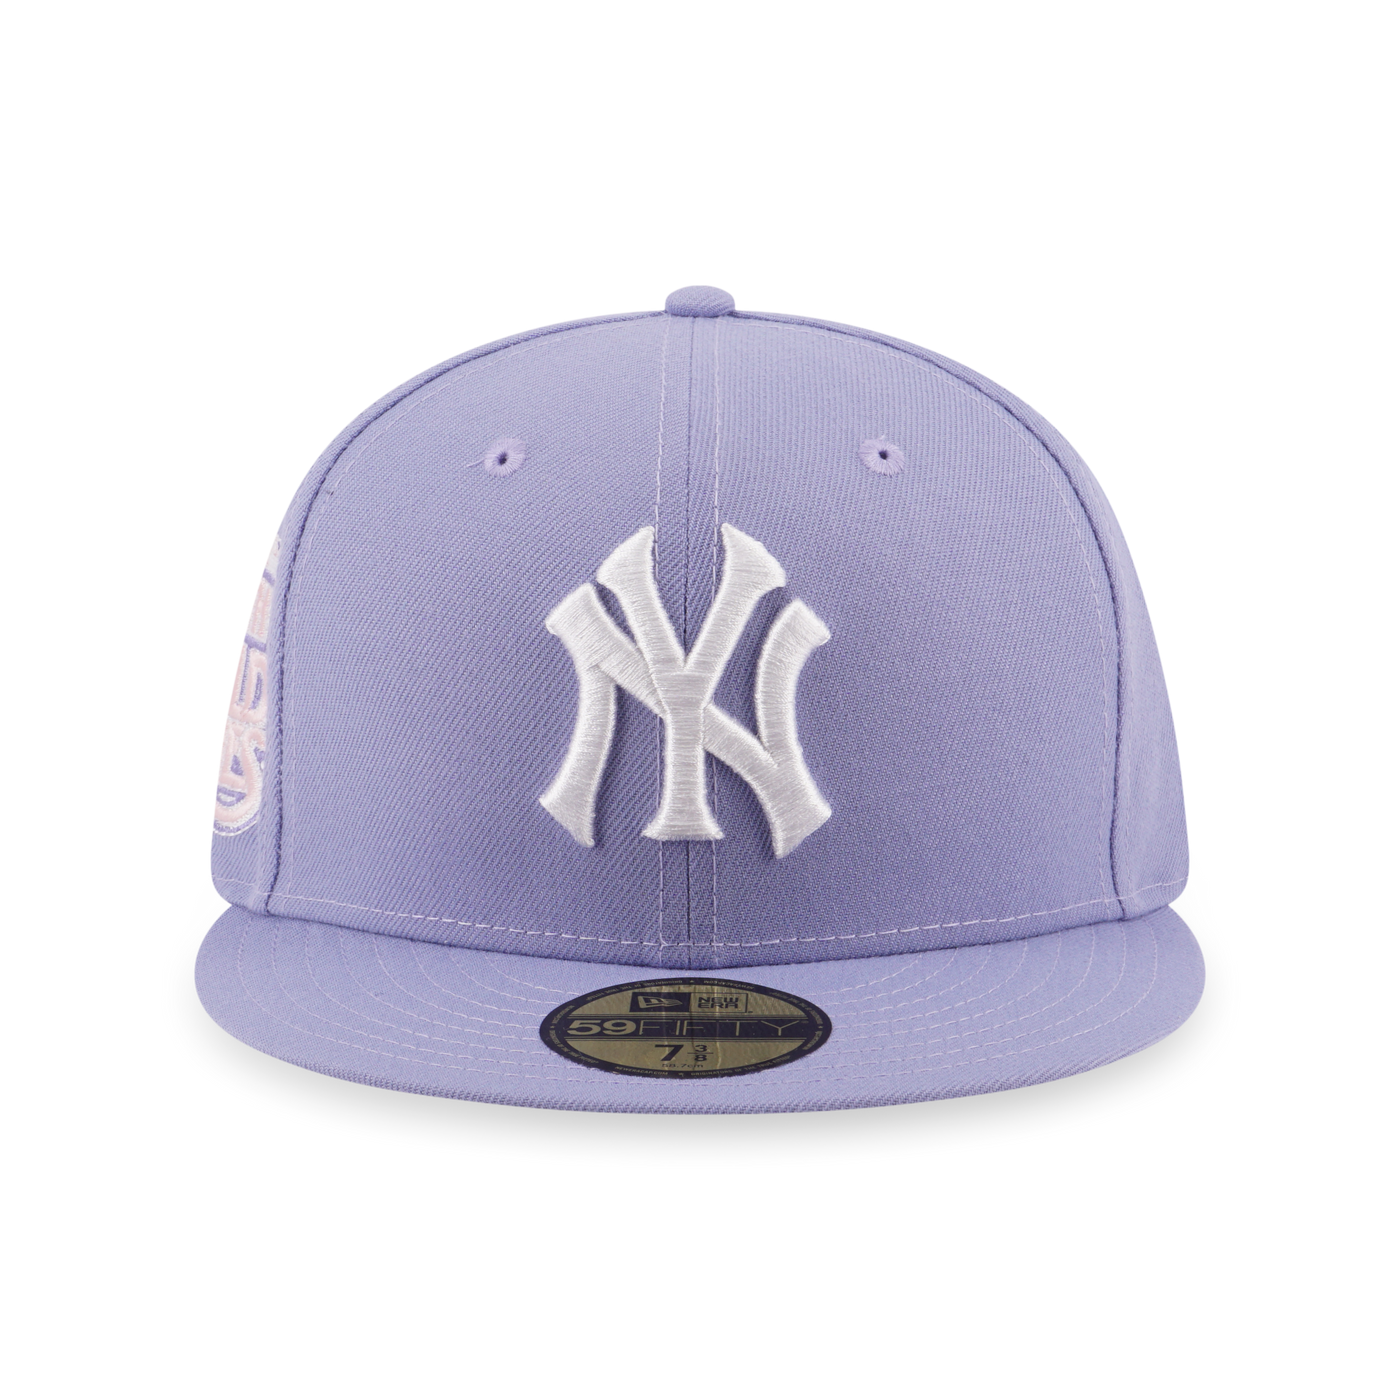 NEW YORK YANKEES 59FIFTY PACK - SUGAR SHACK PASTEL PURPLE 59FIFTY CAP